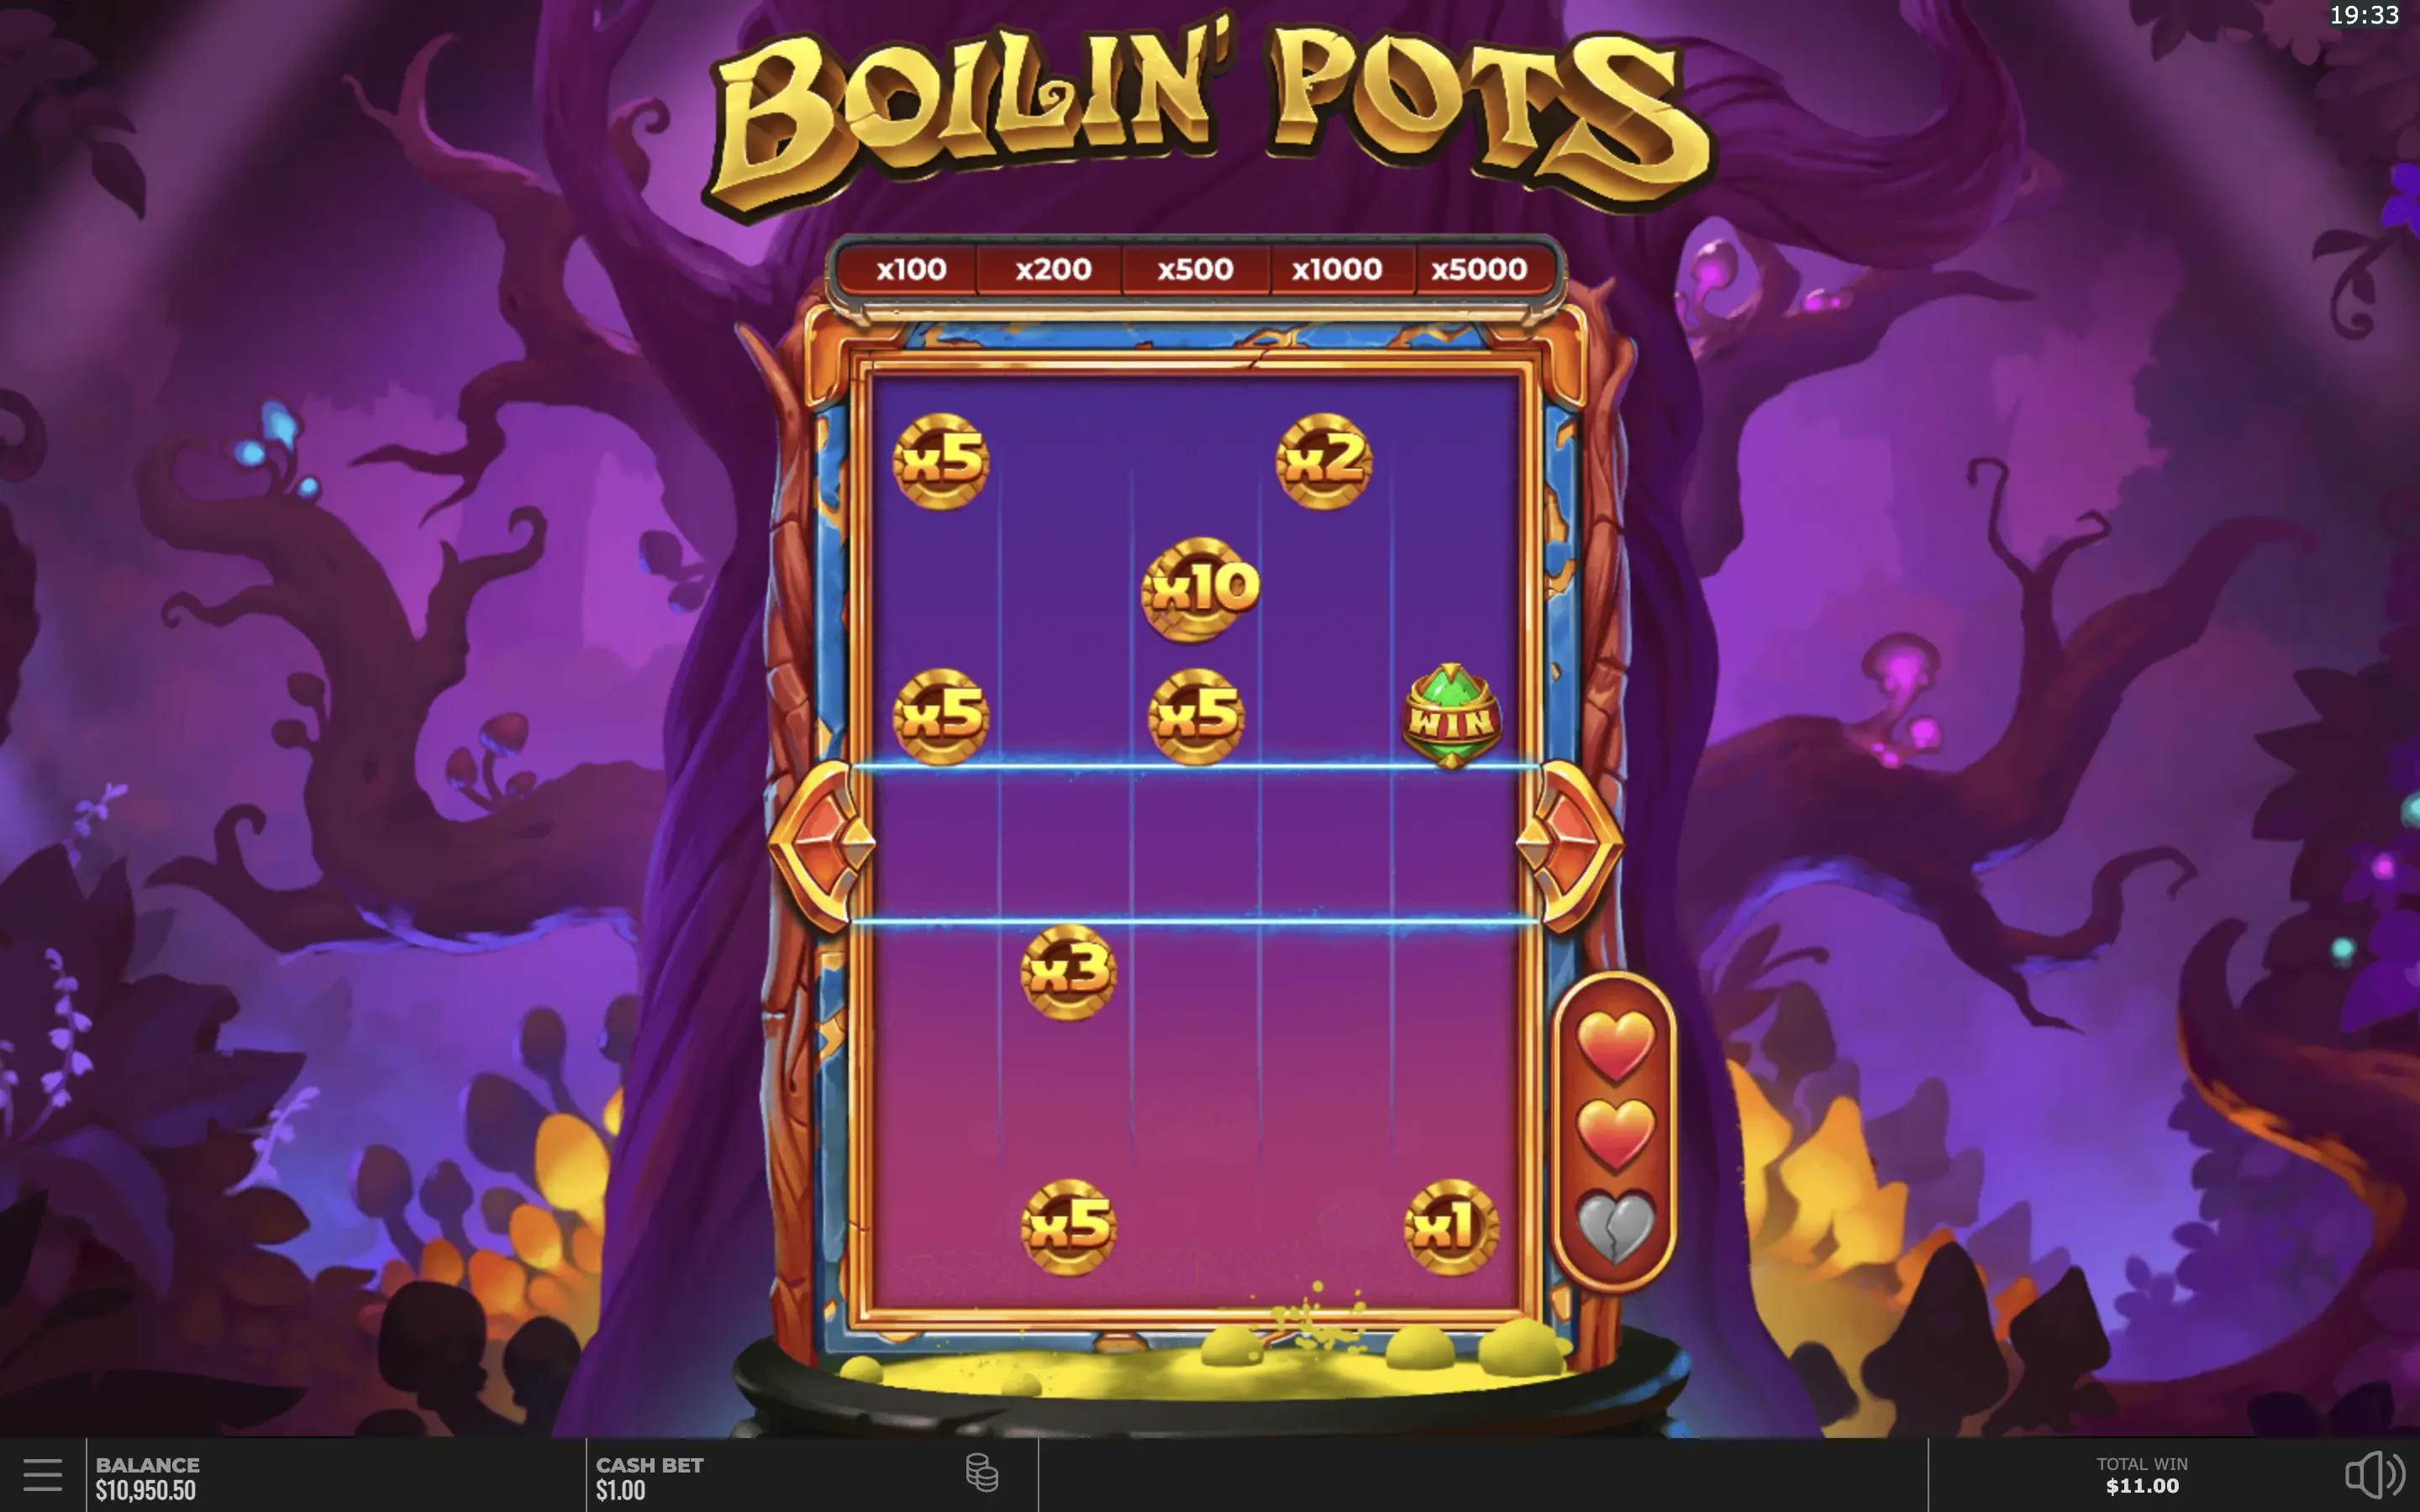 The bonus feature in Boilin' Pots